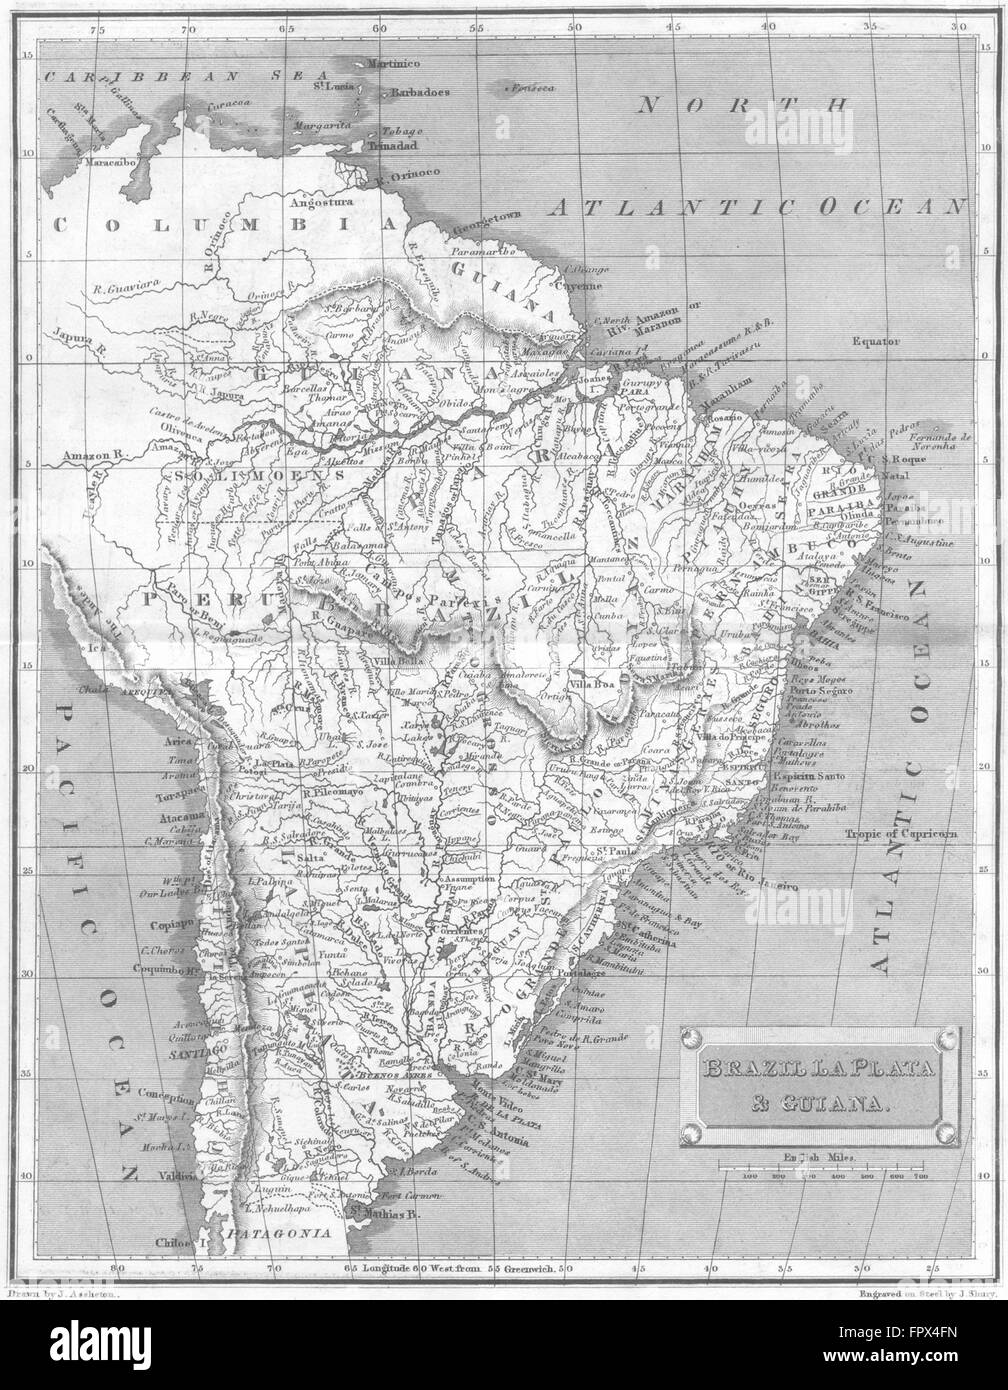 BRAZIL: La Plata & Guyana: Tegg 1827, 1827 antique map Stock Photo